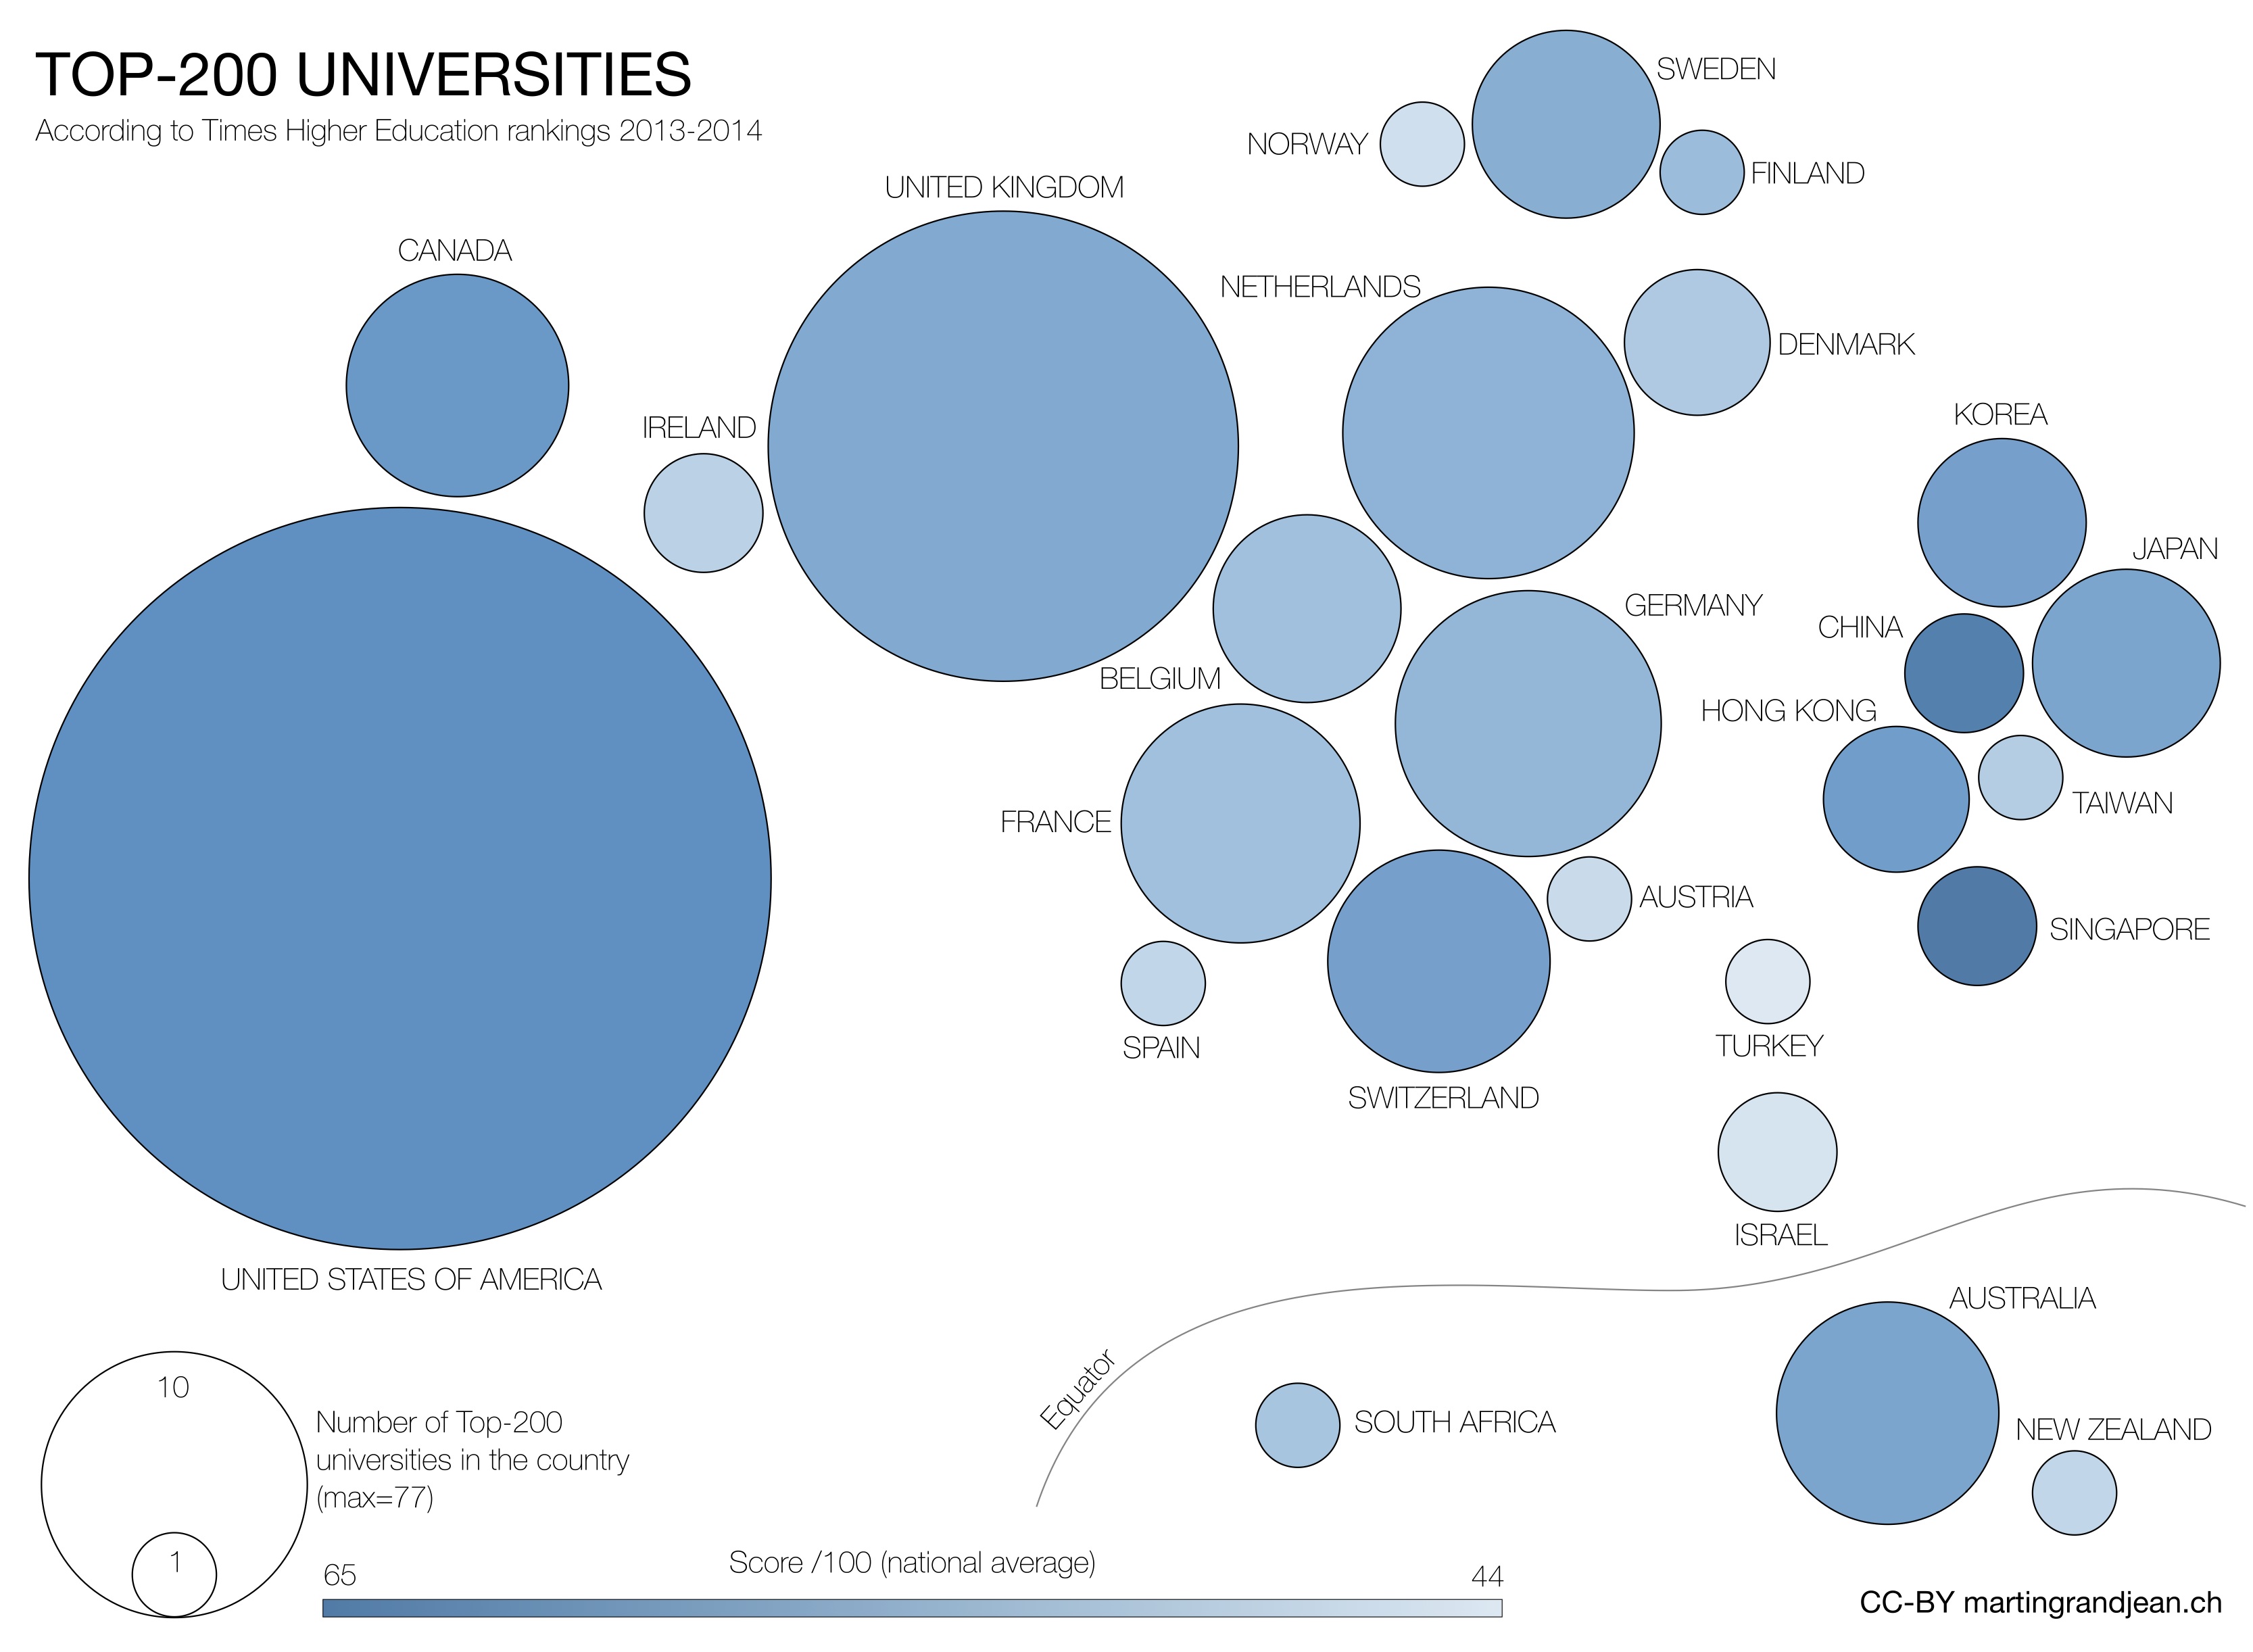 [DataViz] Times Higher Education’s top-200 Universities